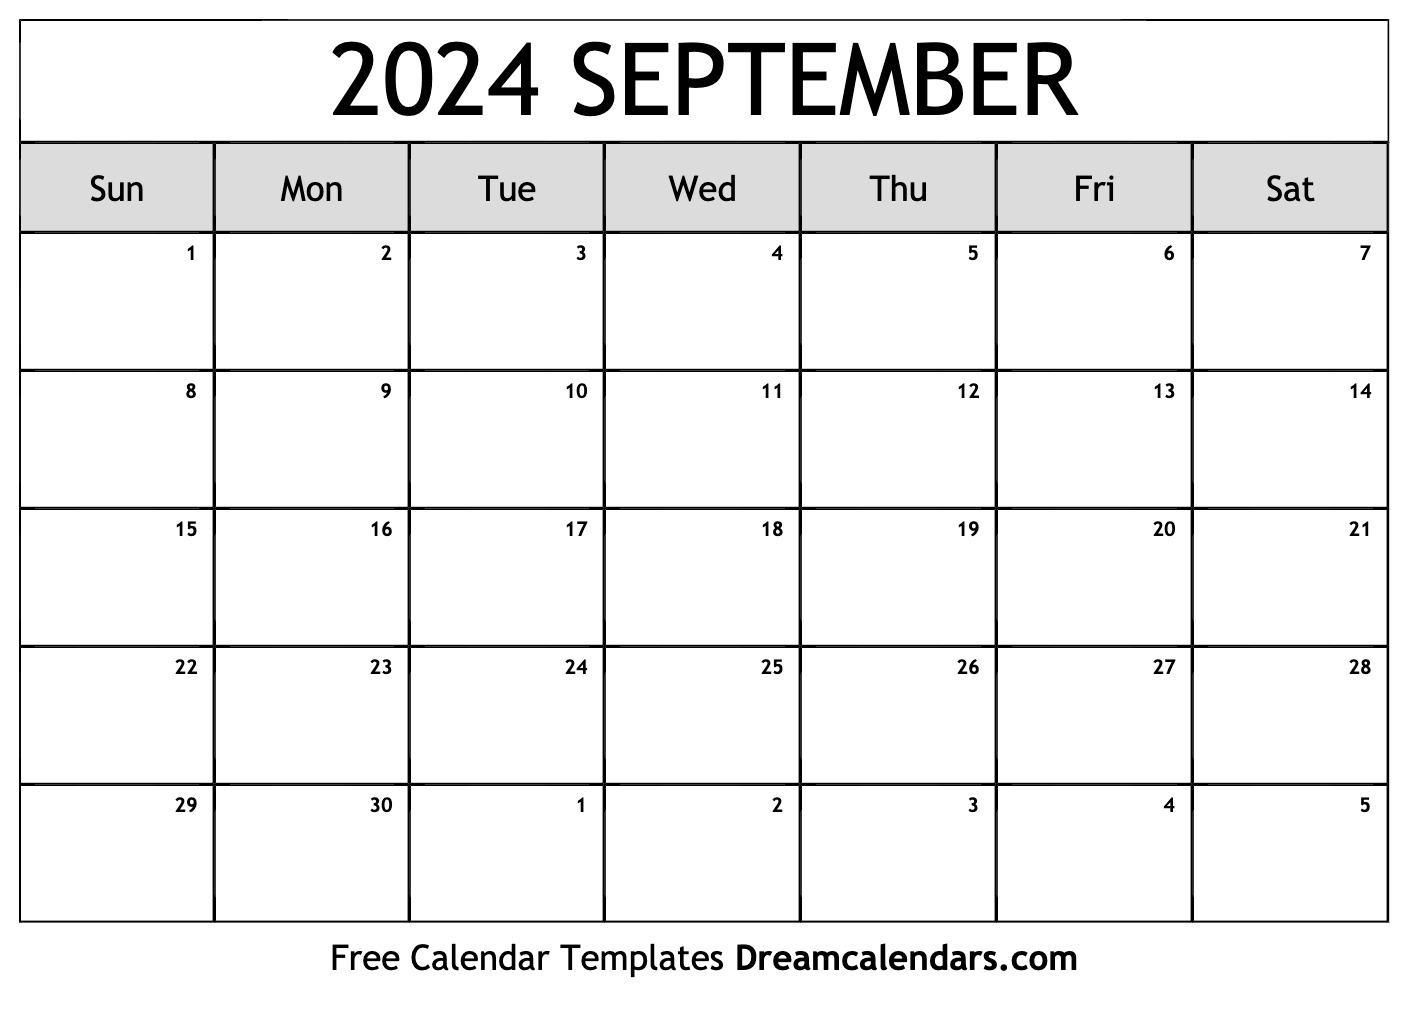 September 2024 Calendar | Free Blank Printable With Holidays with regard to Free Printable Calendar 2024 For September